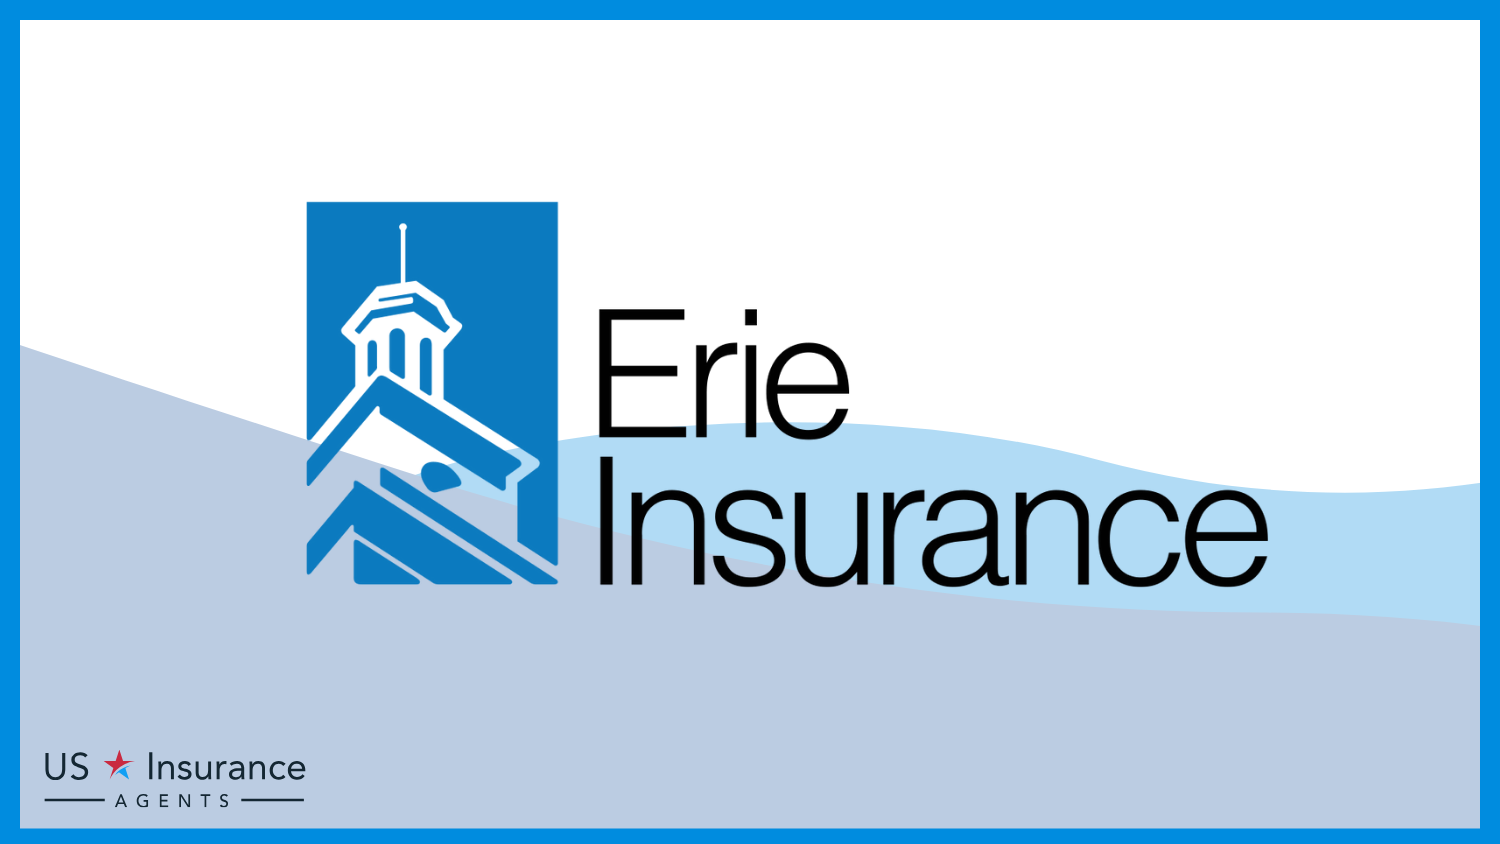 Best Car Insurance for Firefighters: Erie Insurance